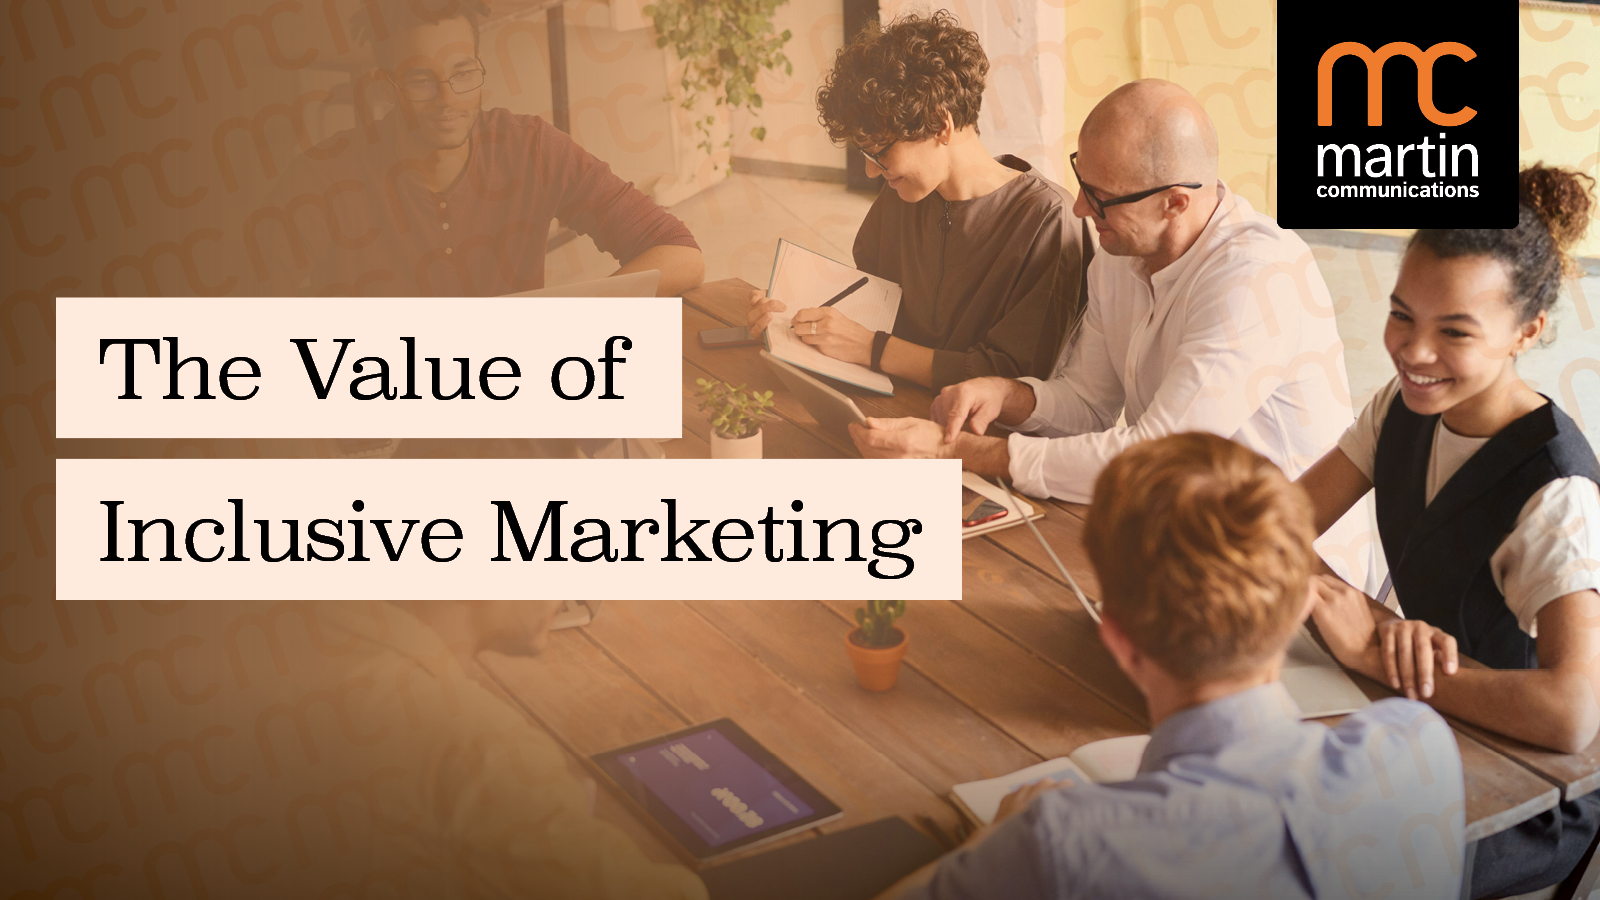 The value of inclusive marketing